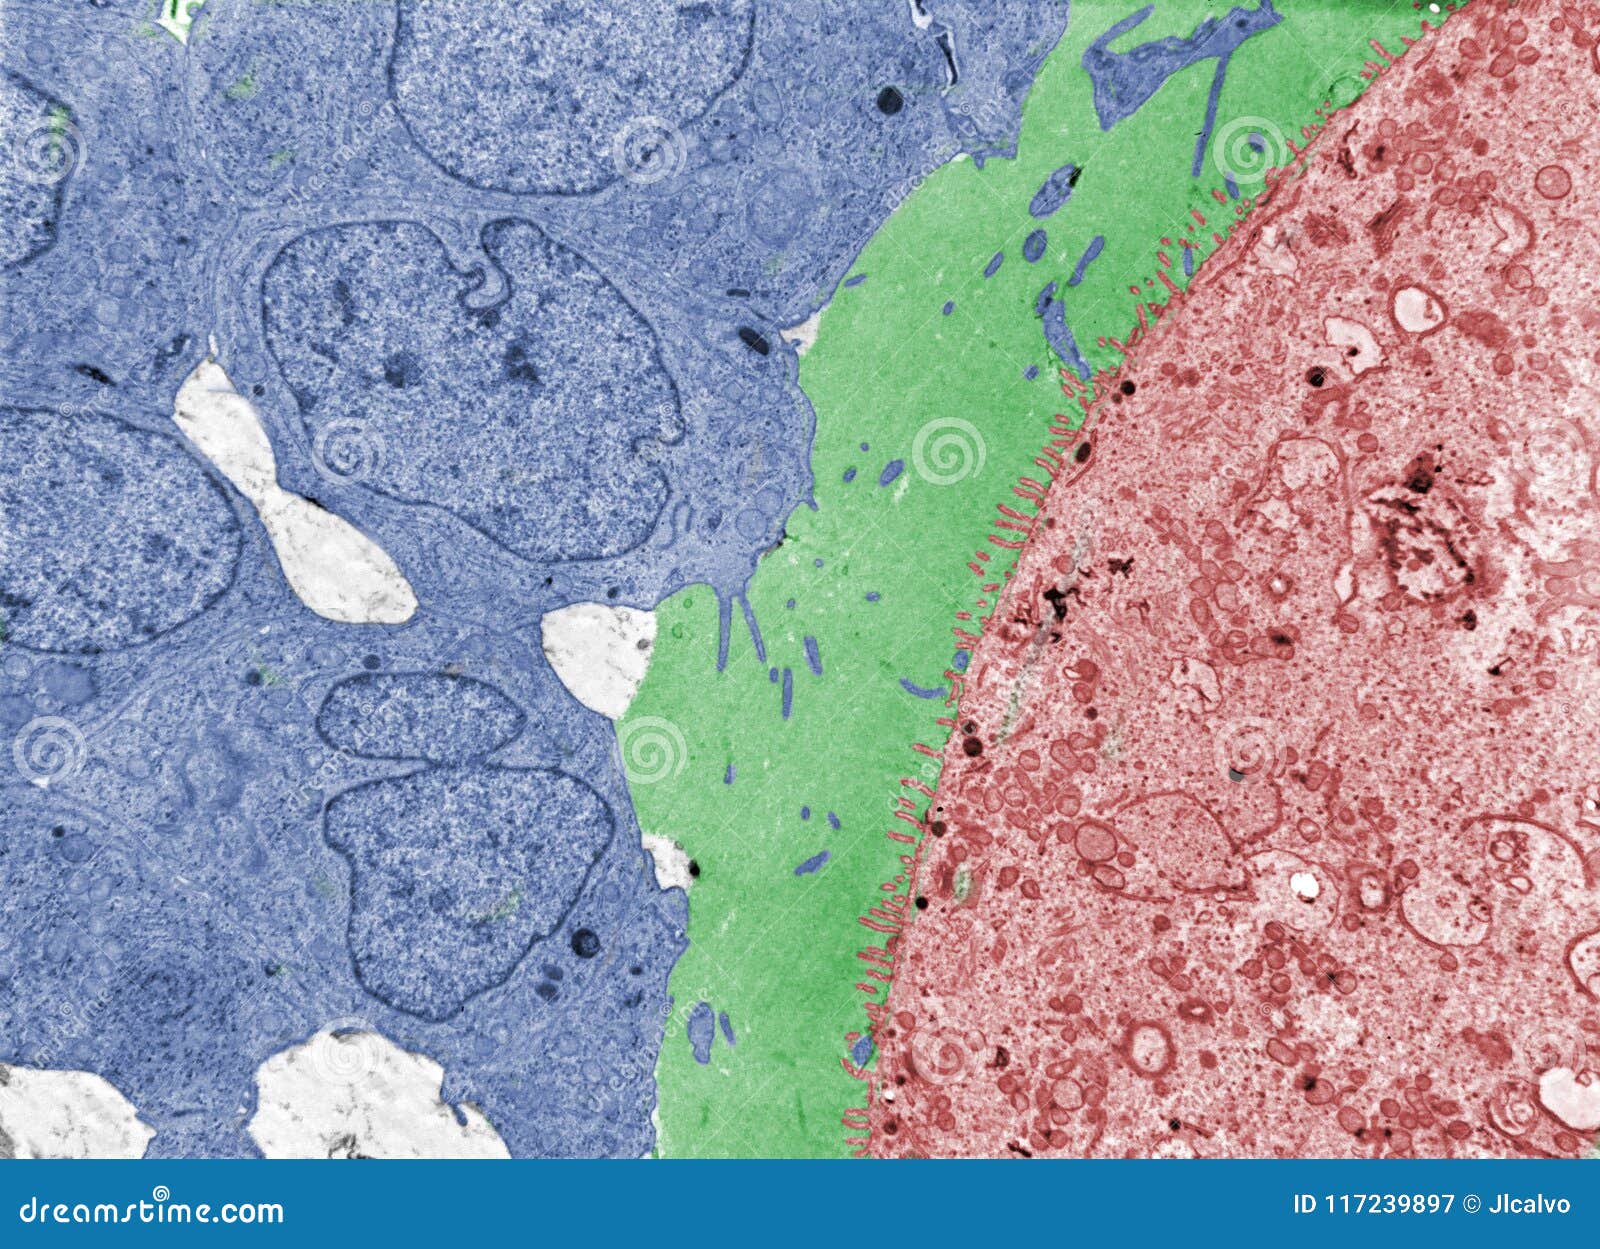 Zona pellucida. TEM stock image. Image of cytological - 117239897